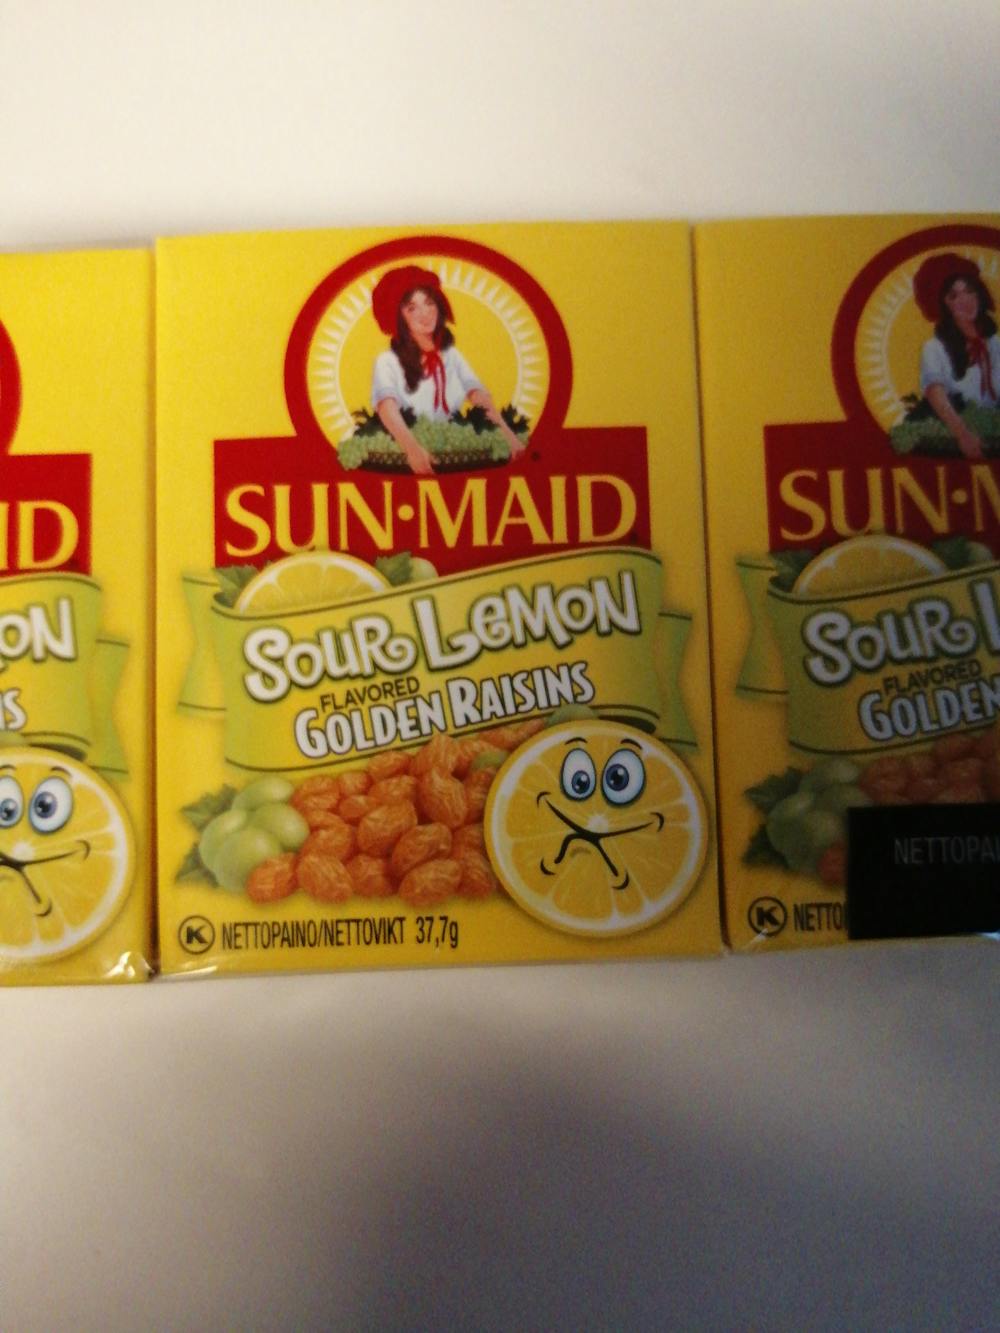 Sour lemon golden raisins, Sunmaid